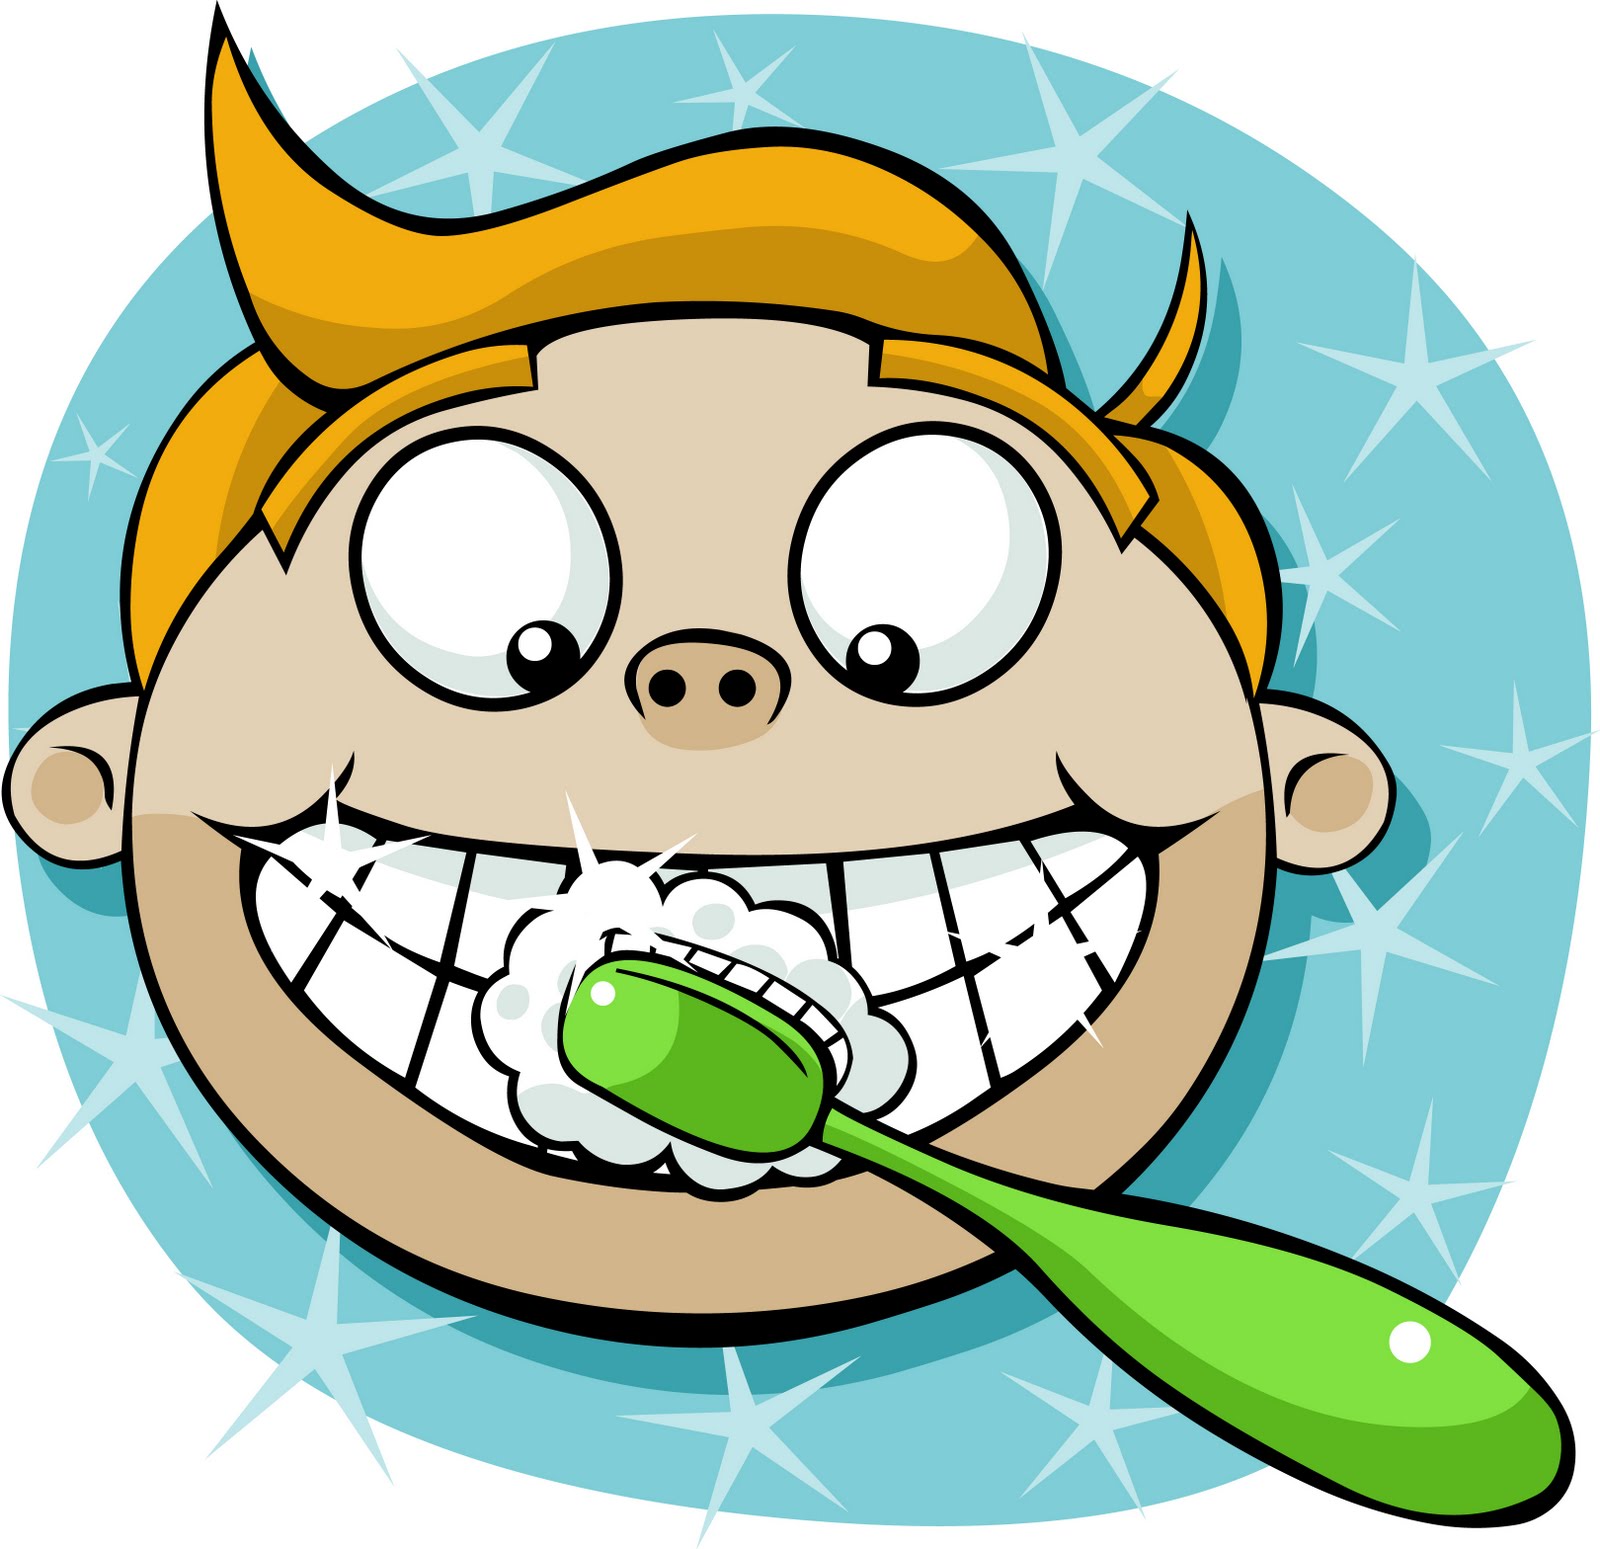 Animated brushing teeth clipart